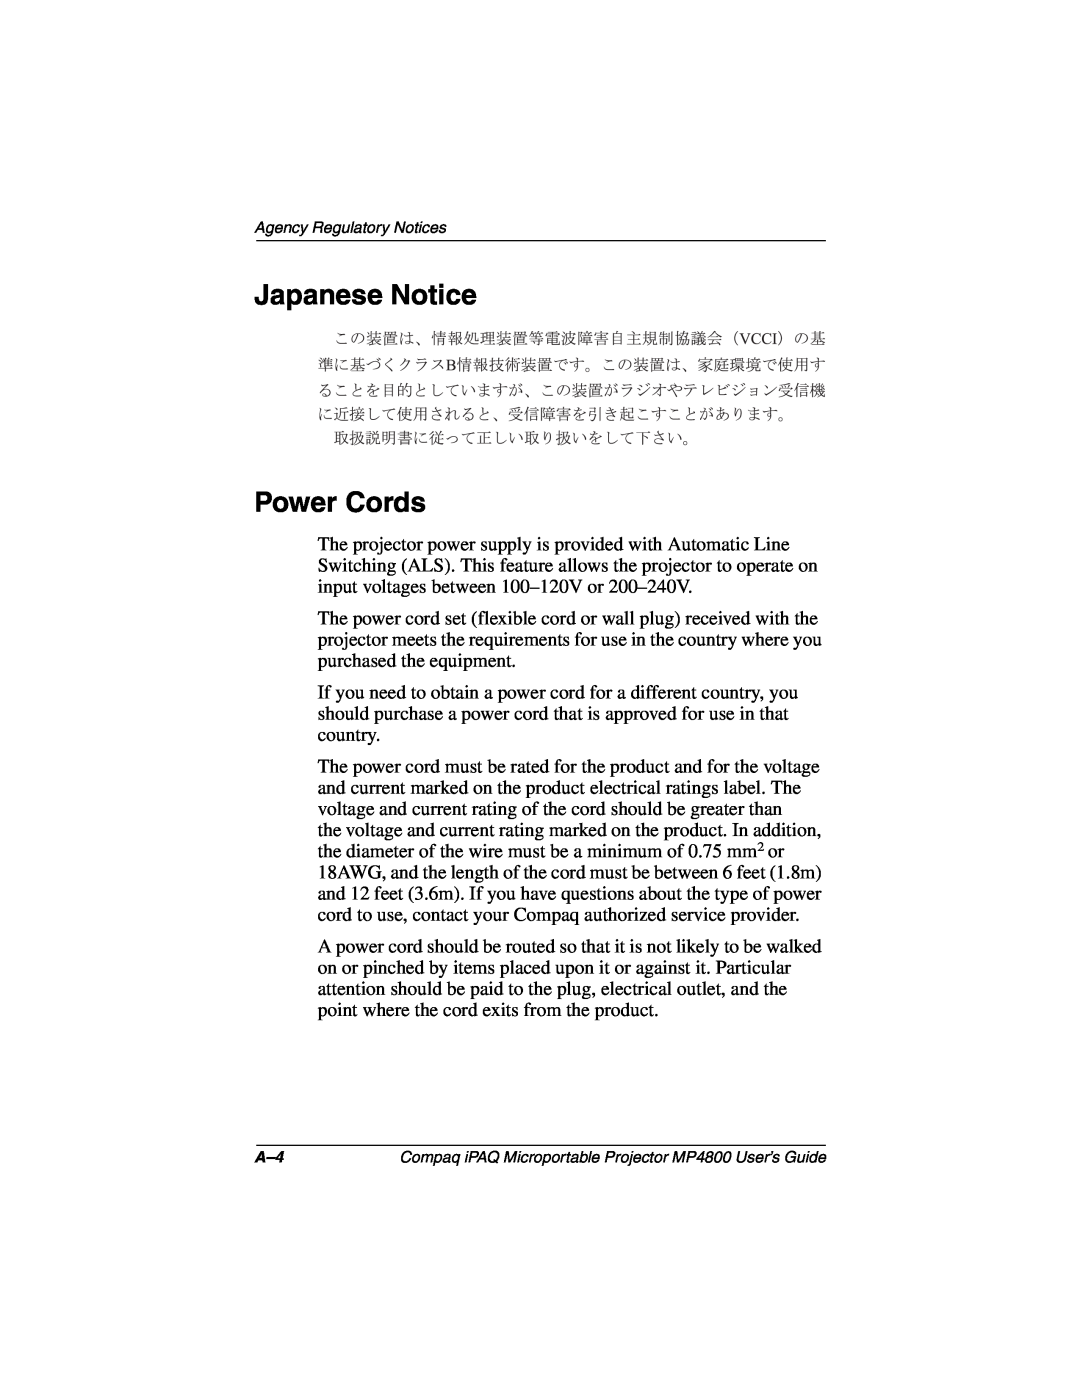 Compaq MP4800 manual Japanese Notice Power Cords 